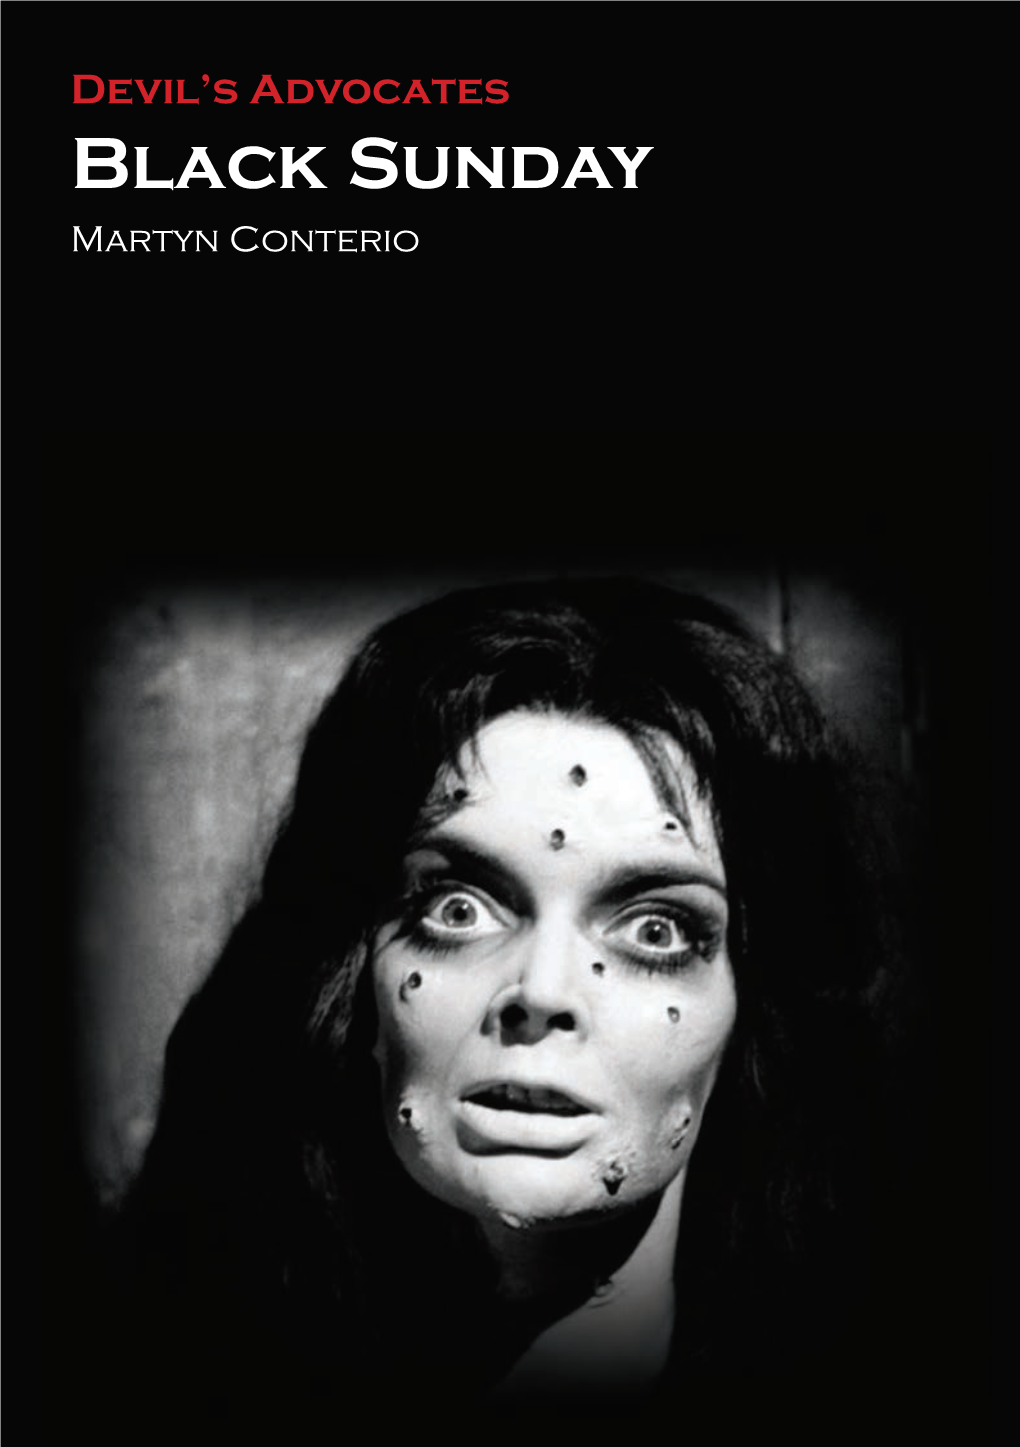 Black Sunday Black Sunday Martyn Conterio Martyn Conterio DEVIL’S ADVOCATES Is a Series Devoted to Exploring the Classics of Horror Cinema